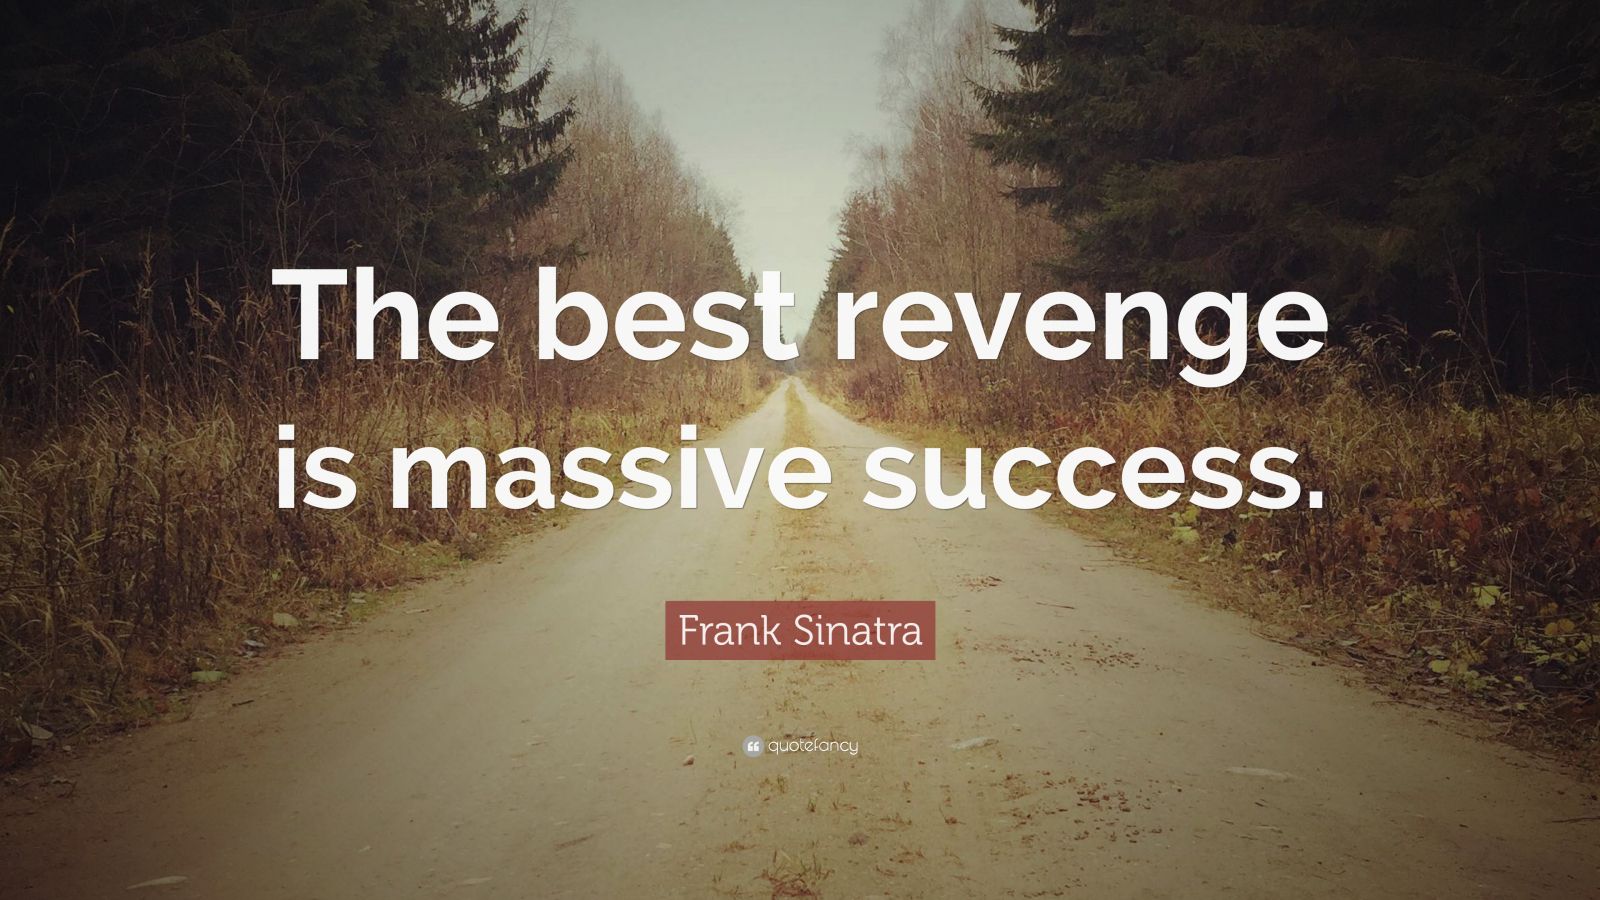 Frank Sinatra Quote: “The best revenge is massive success.” (18